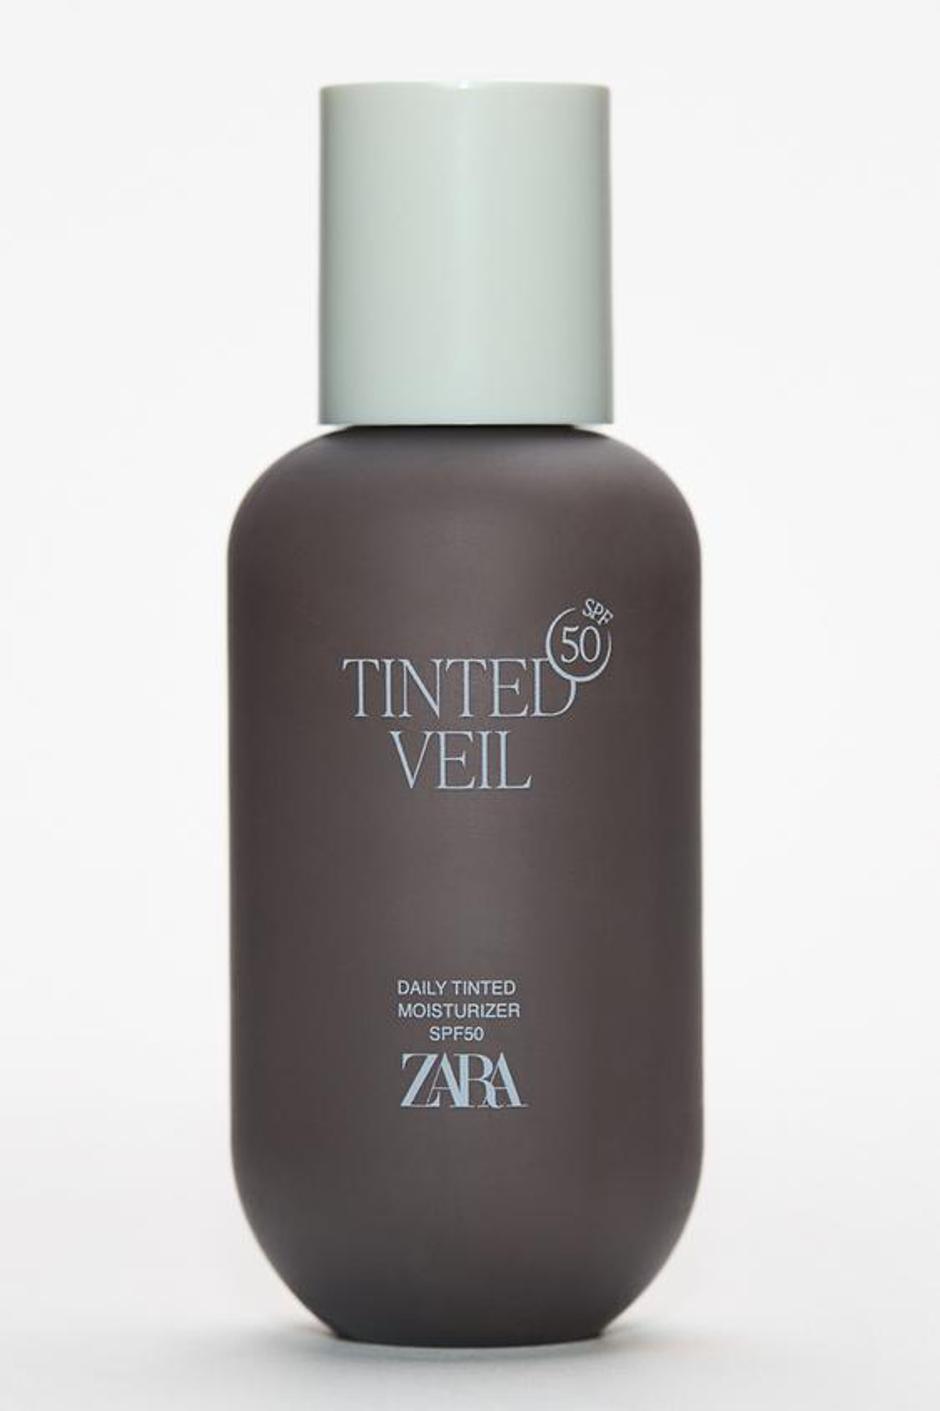 Foto: Zara, Tinted Veil (Tan) | Autor: Zara